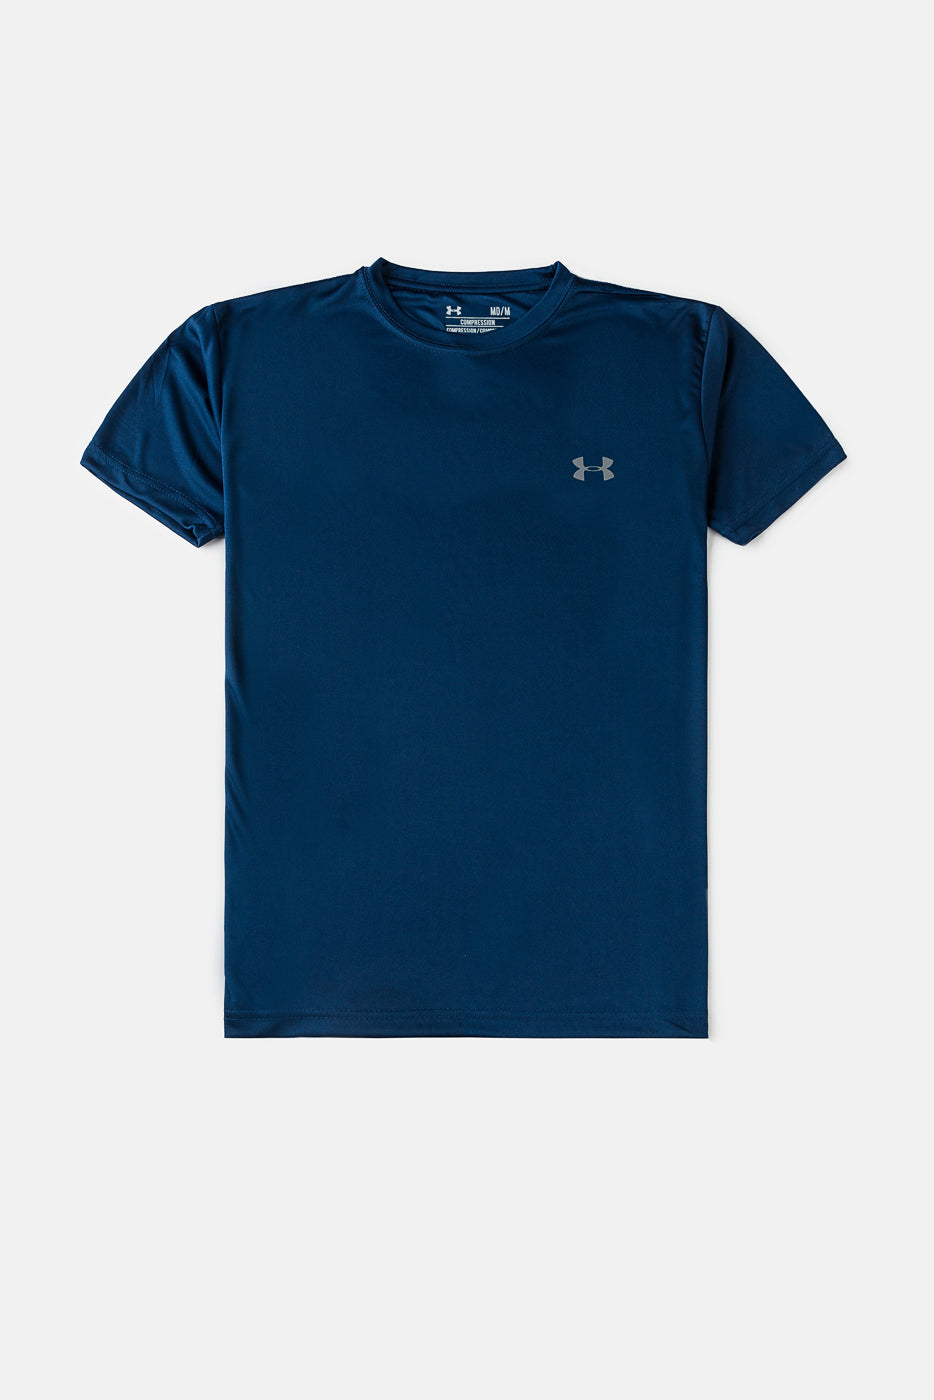 Under Armour Premium Quality Dri-FIT T-Shirt Navy Blue